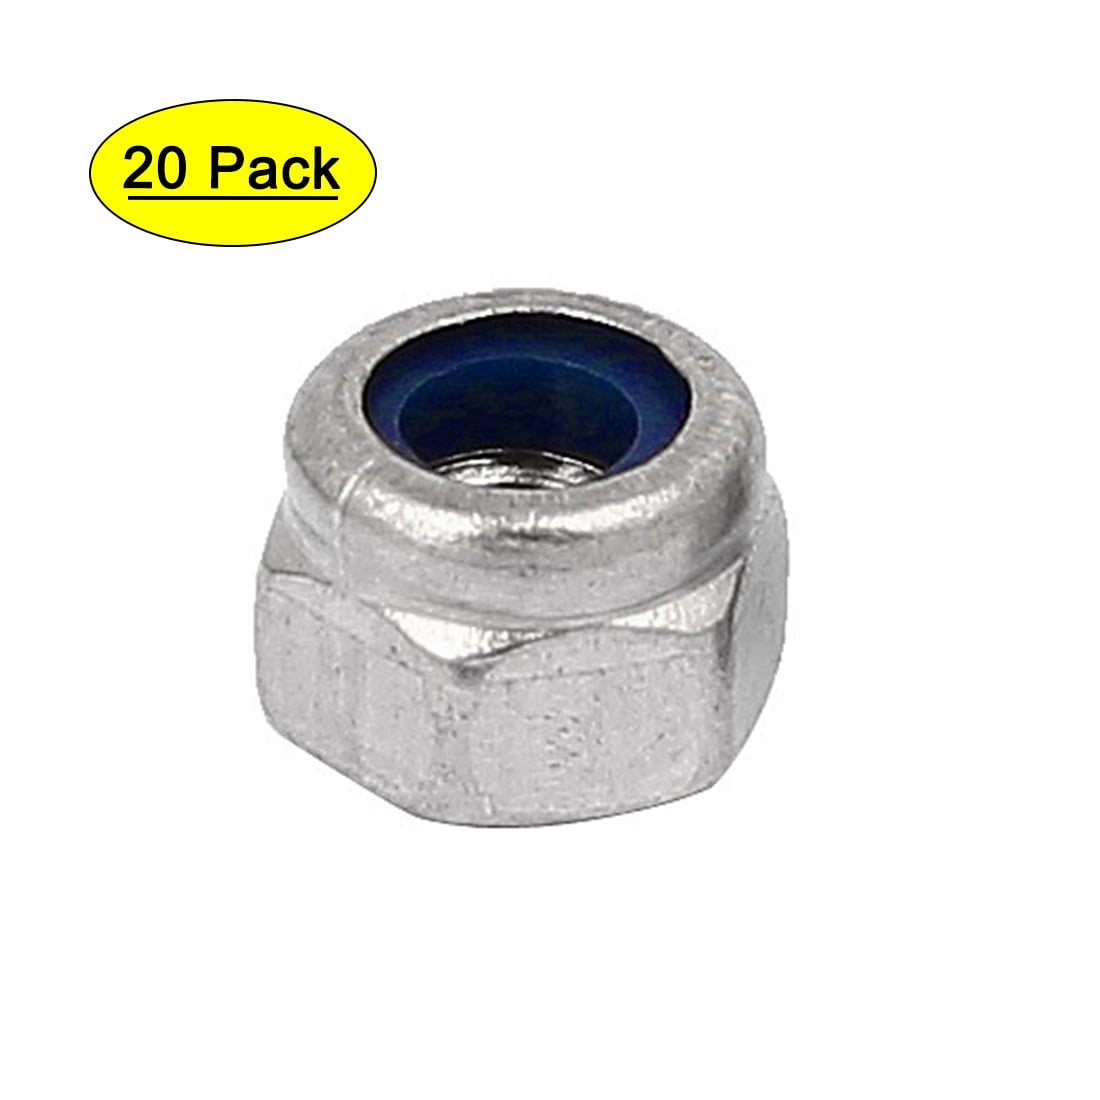 50 Pack 316 Marine Grade Stainless Steel with Nylon Insert, White Nylon Hex Insert #8-32 Lock Nut